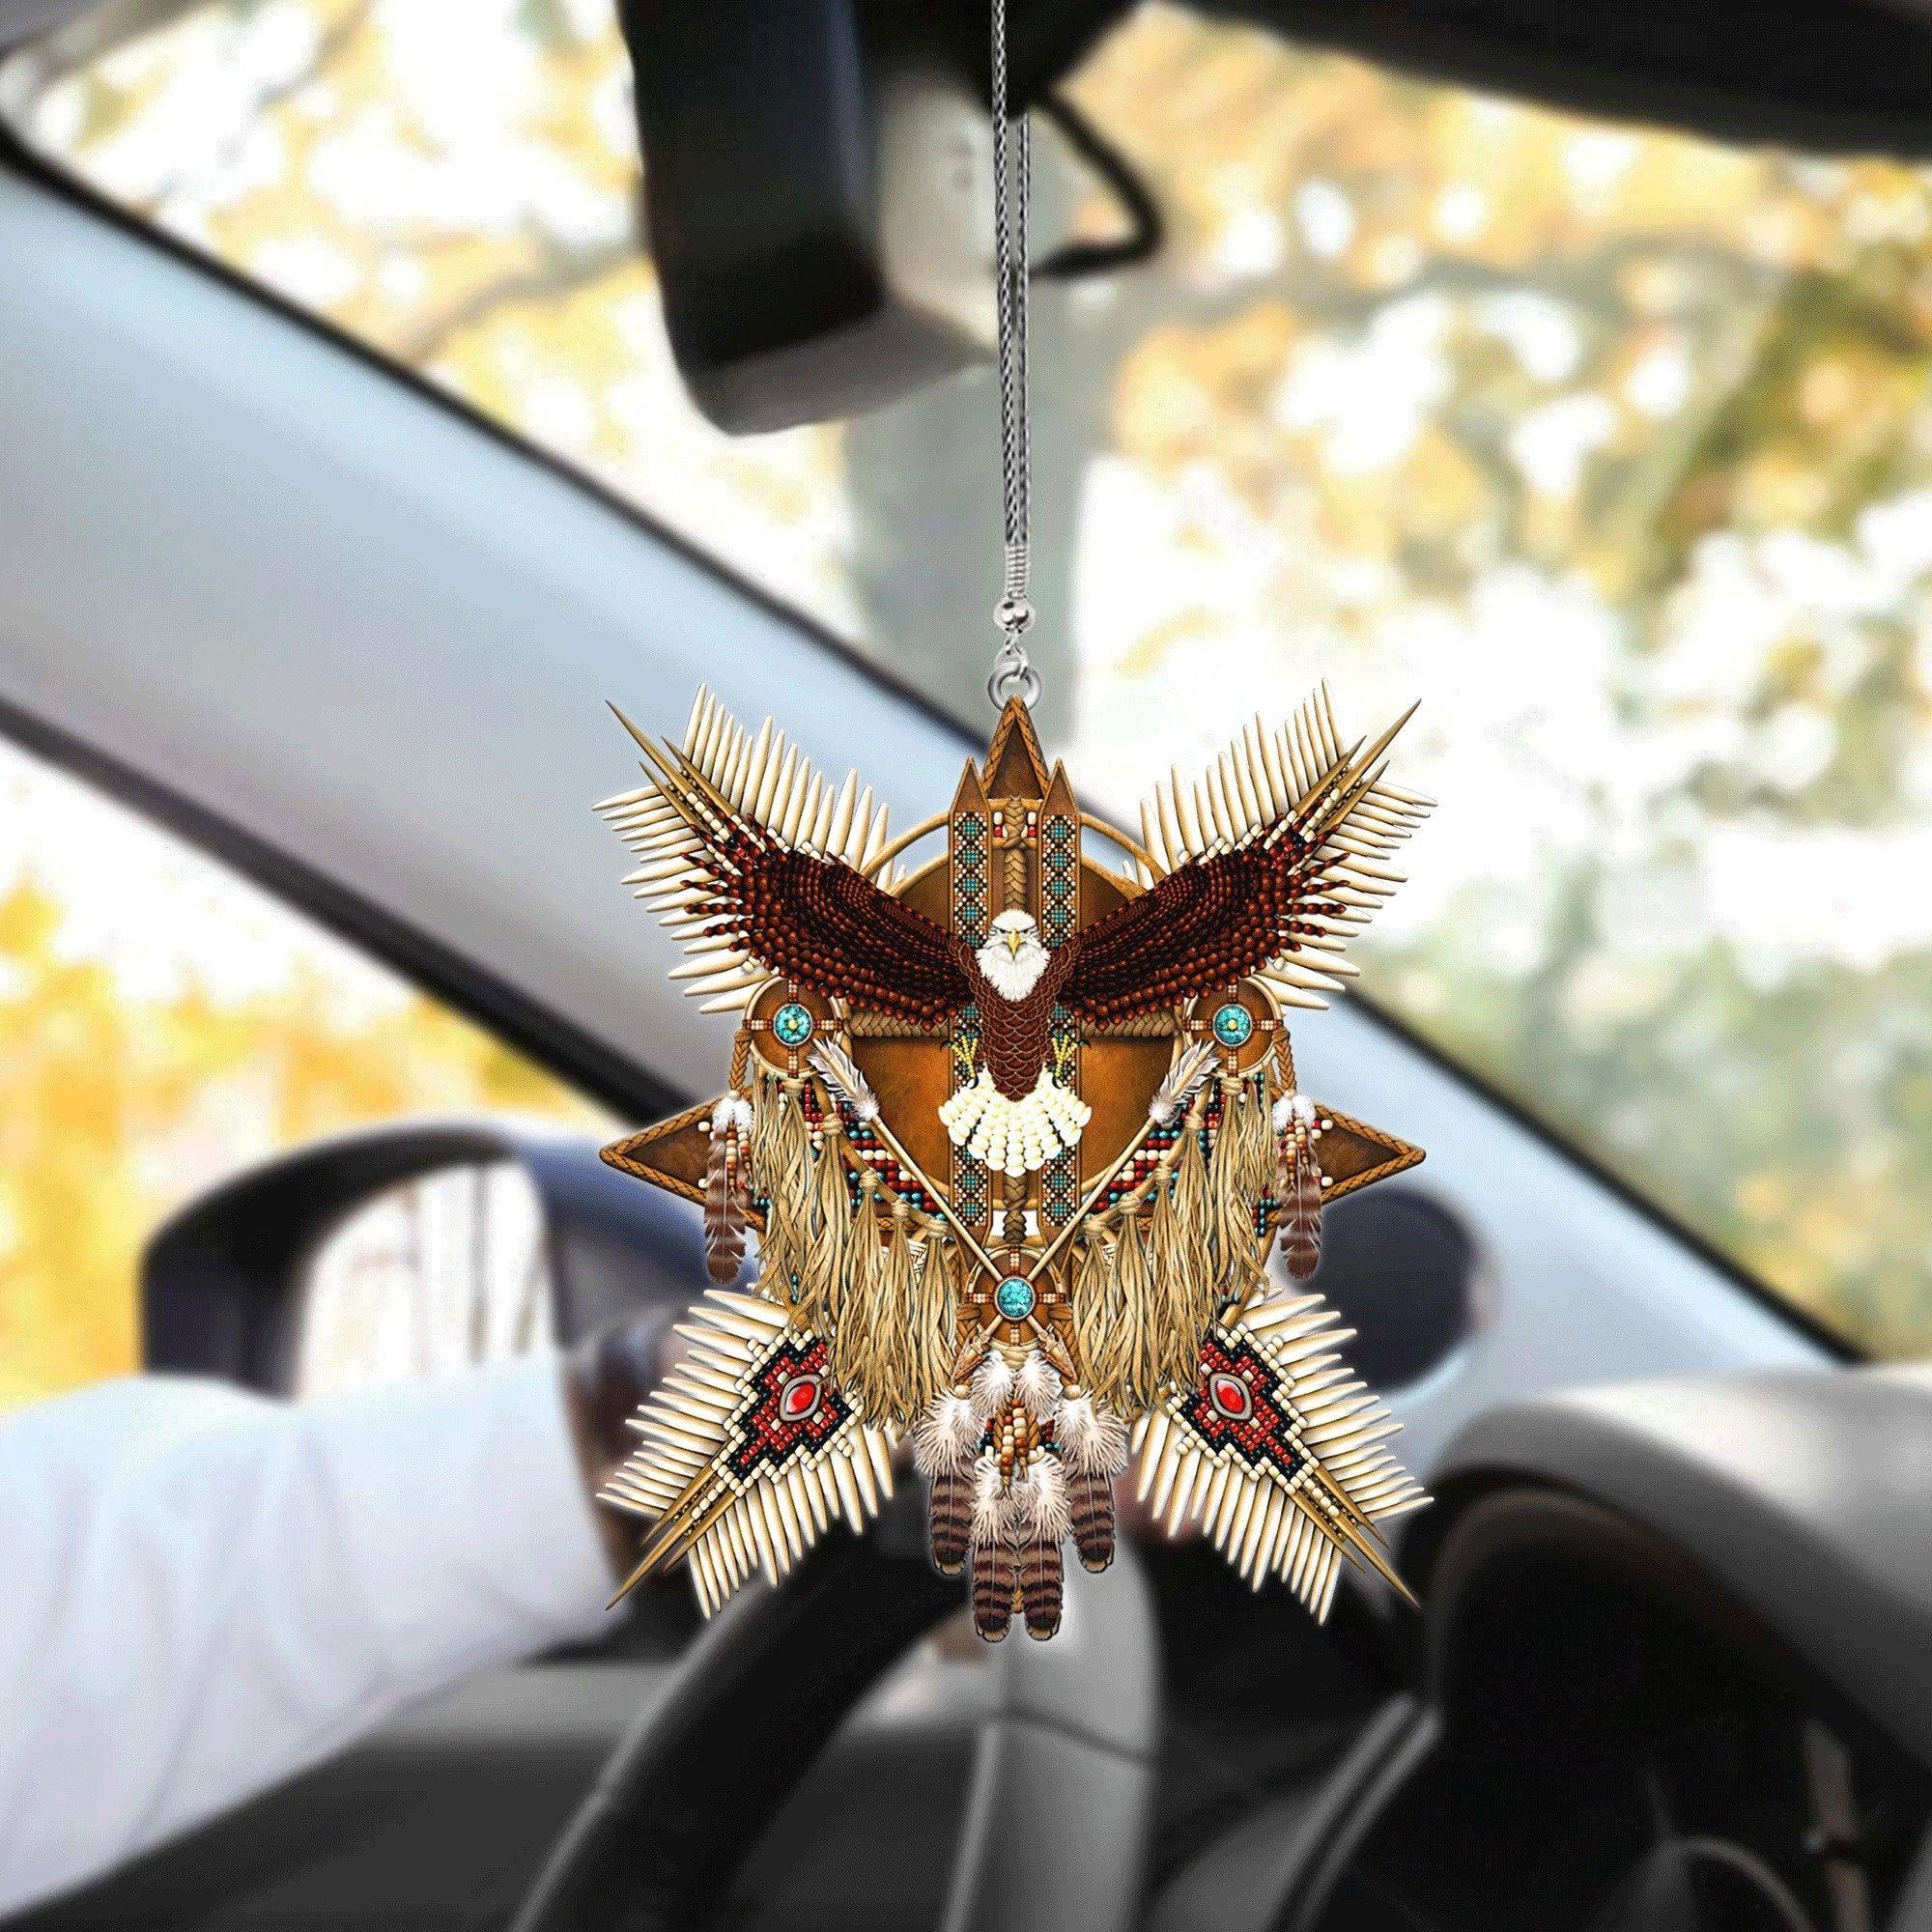 Native American Decoration For Car Interior/ Ornament For Car